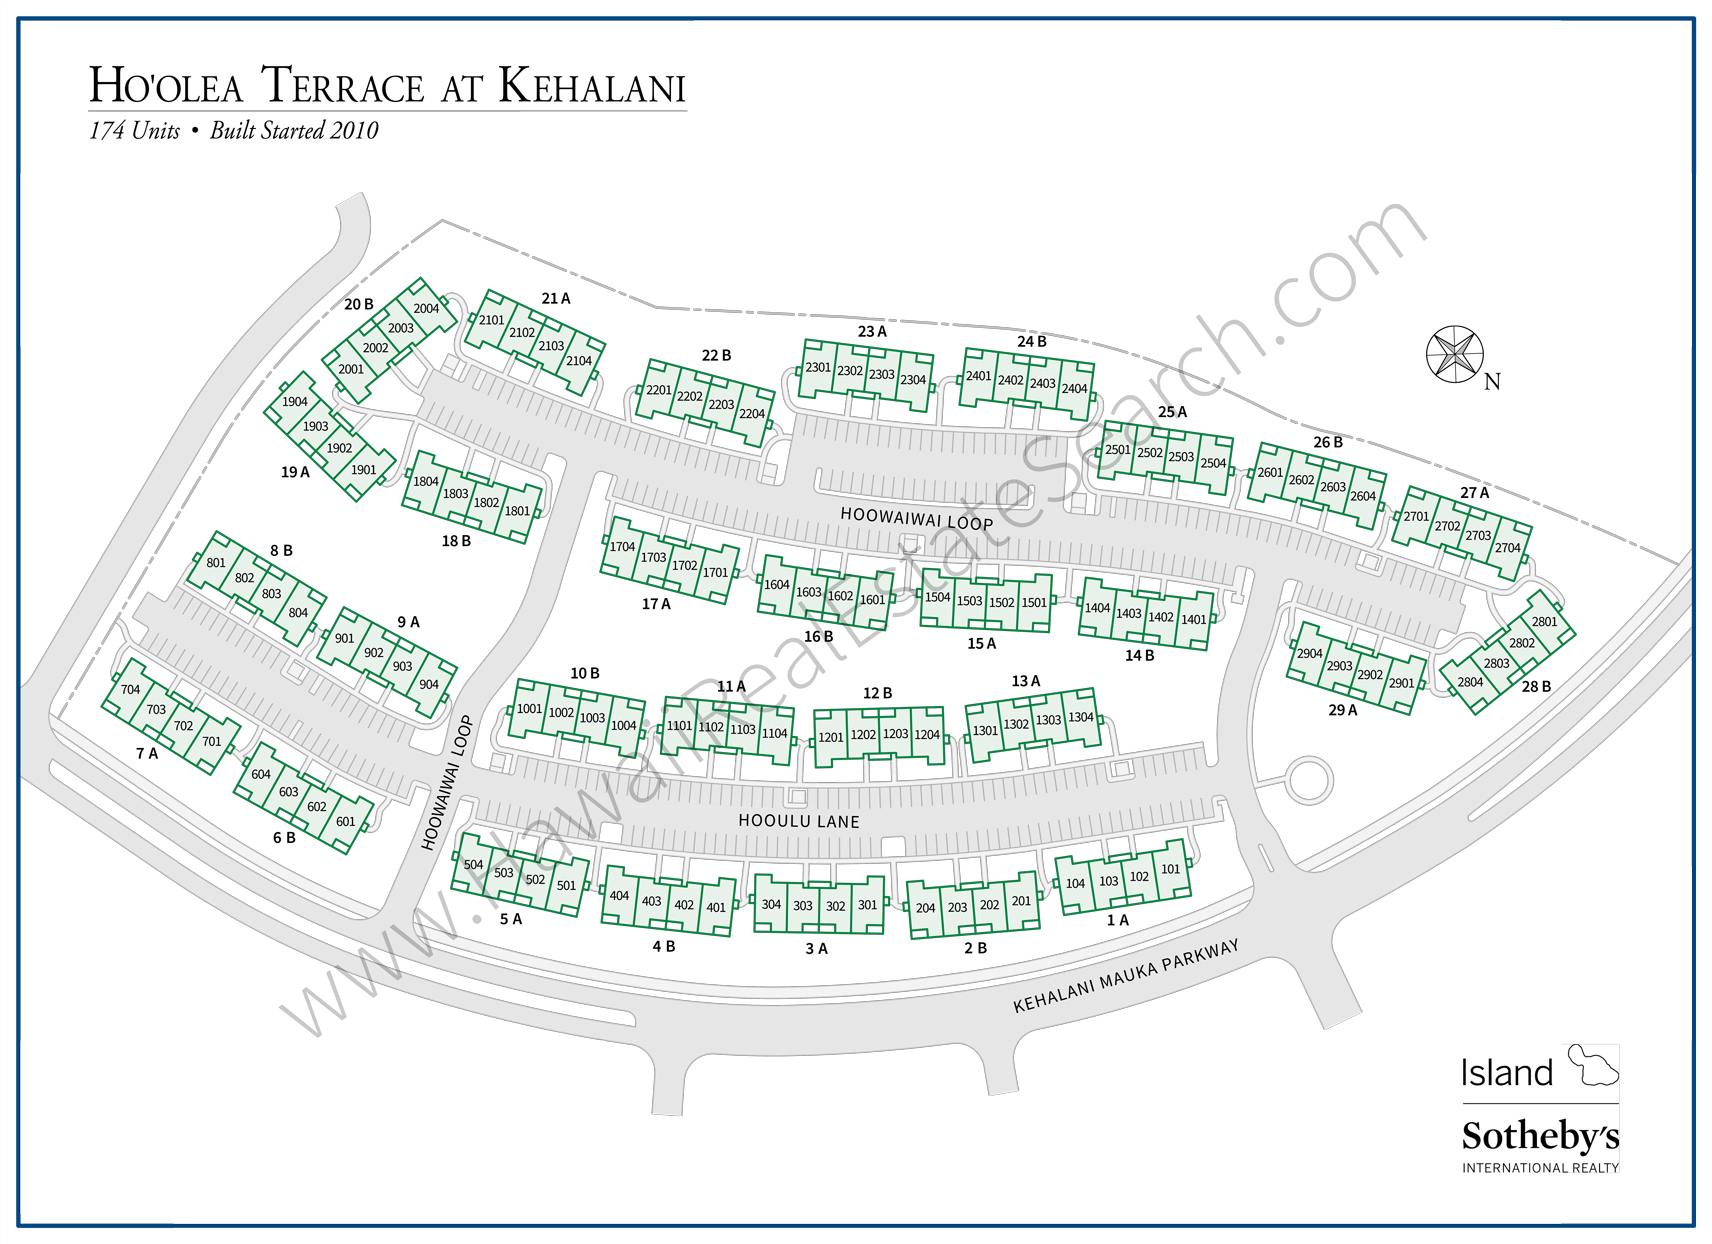 Map of Hoolea Terrace Detailed 2020